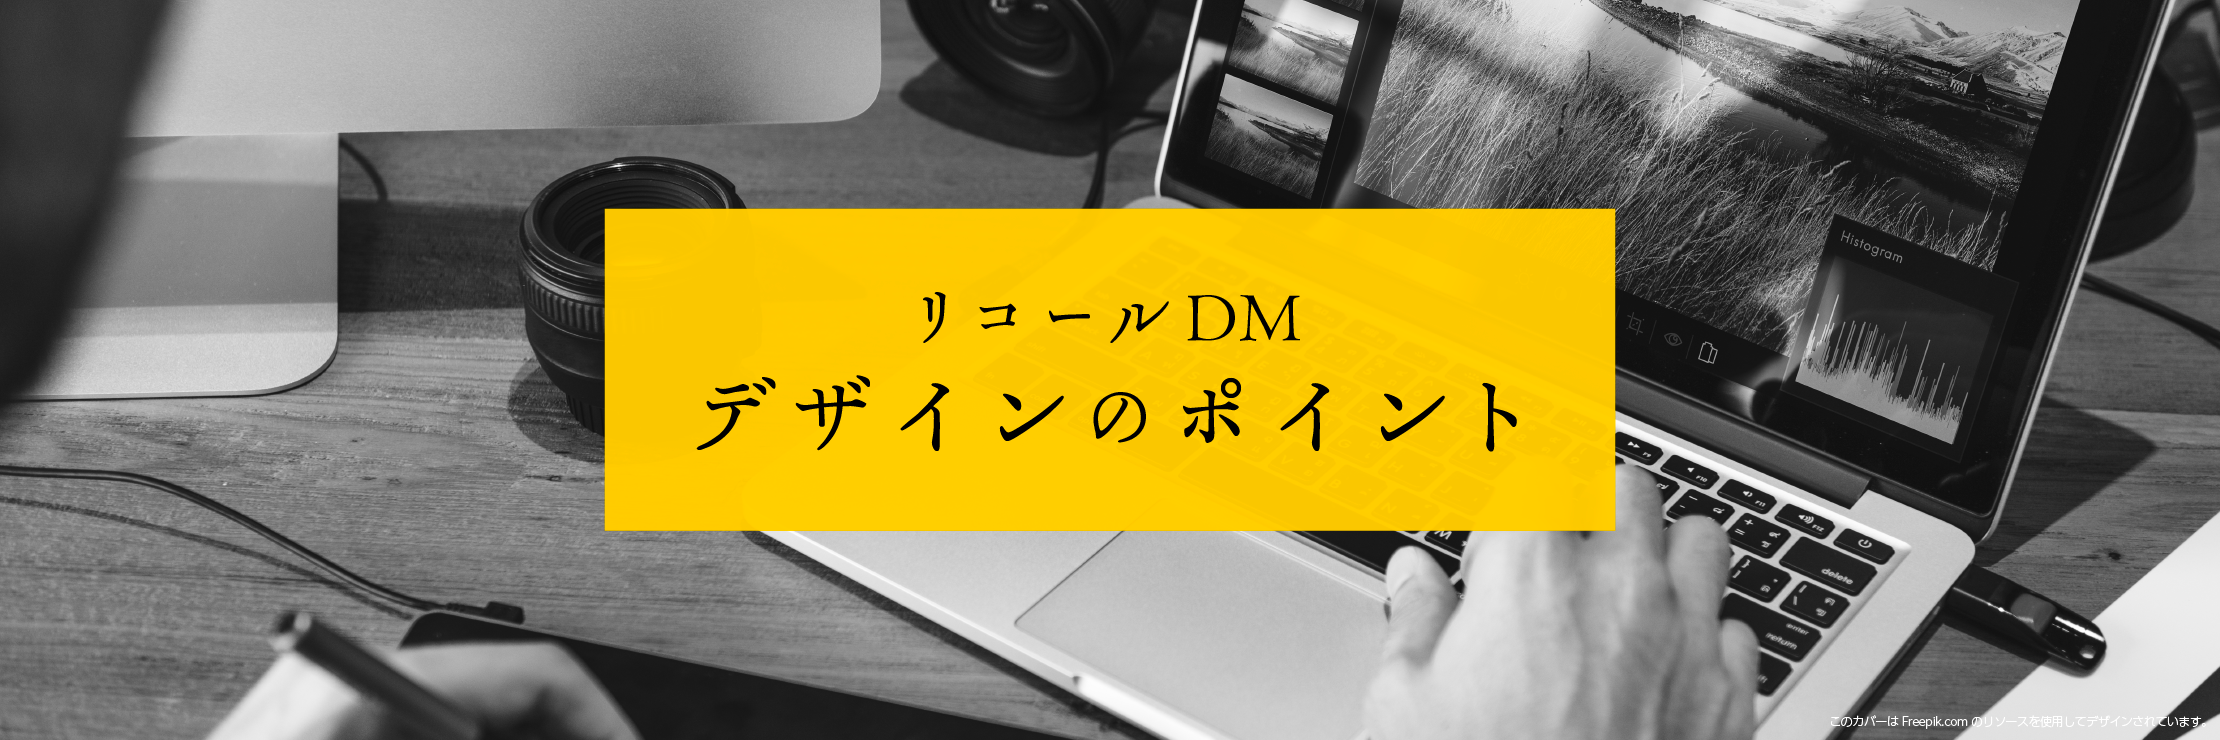 Yamato Dialog & Media Co.,Ltd.